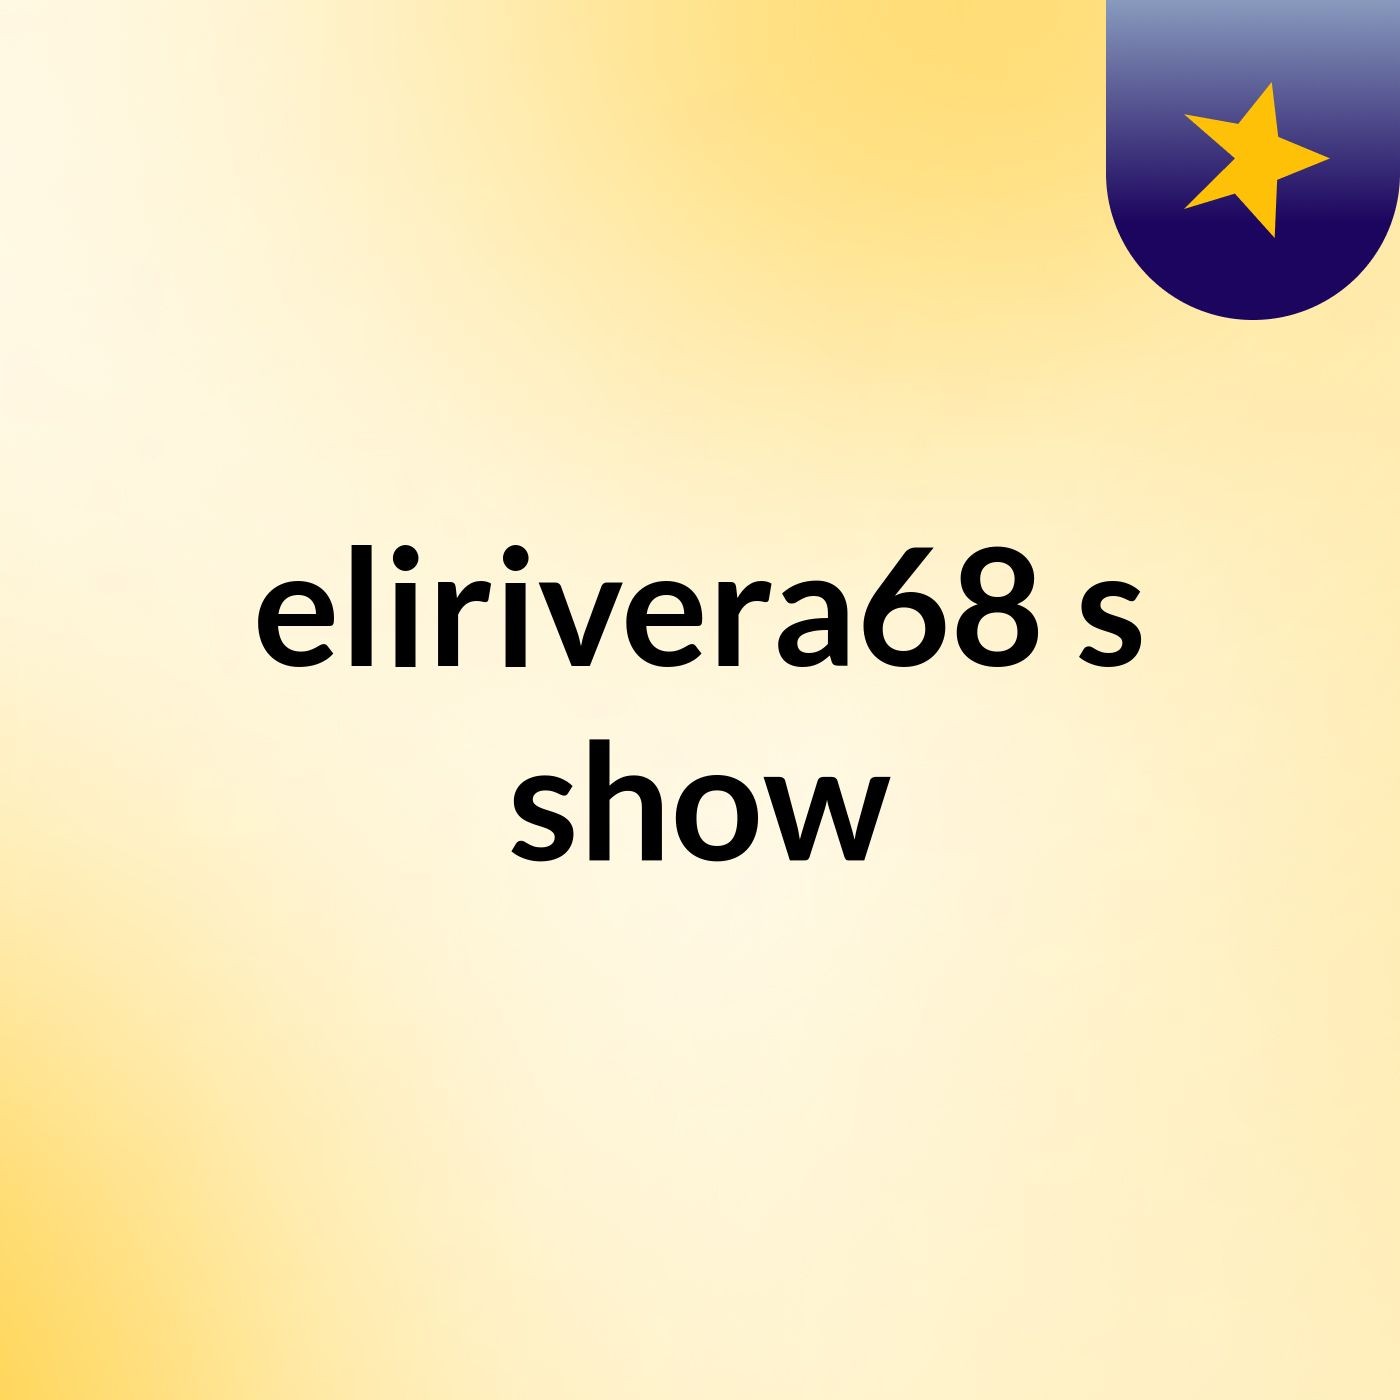 elirivera68's show